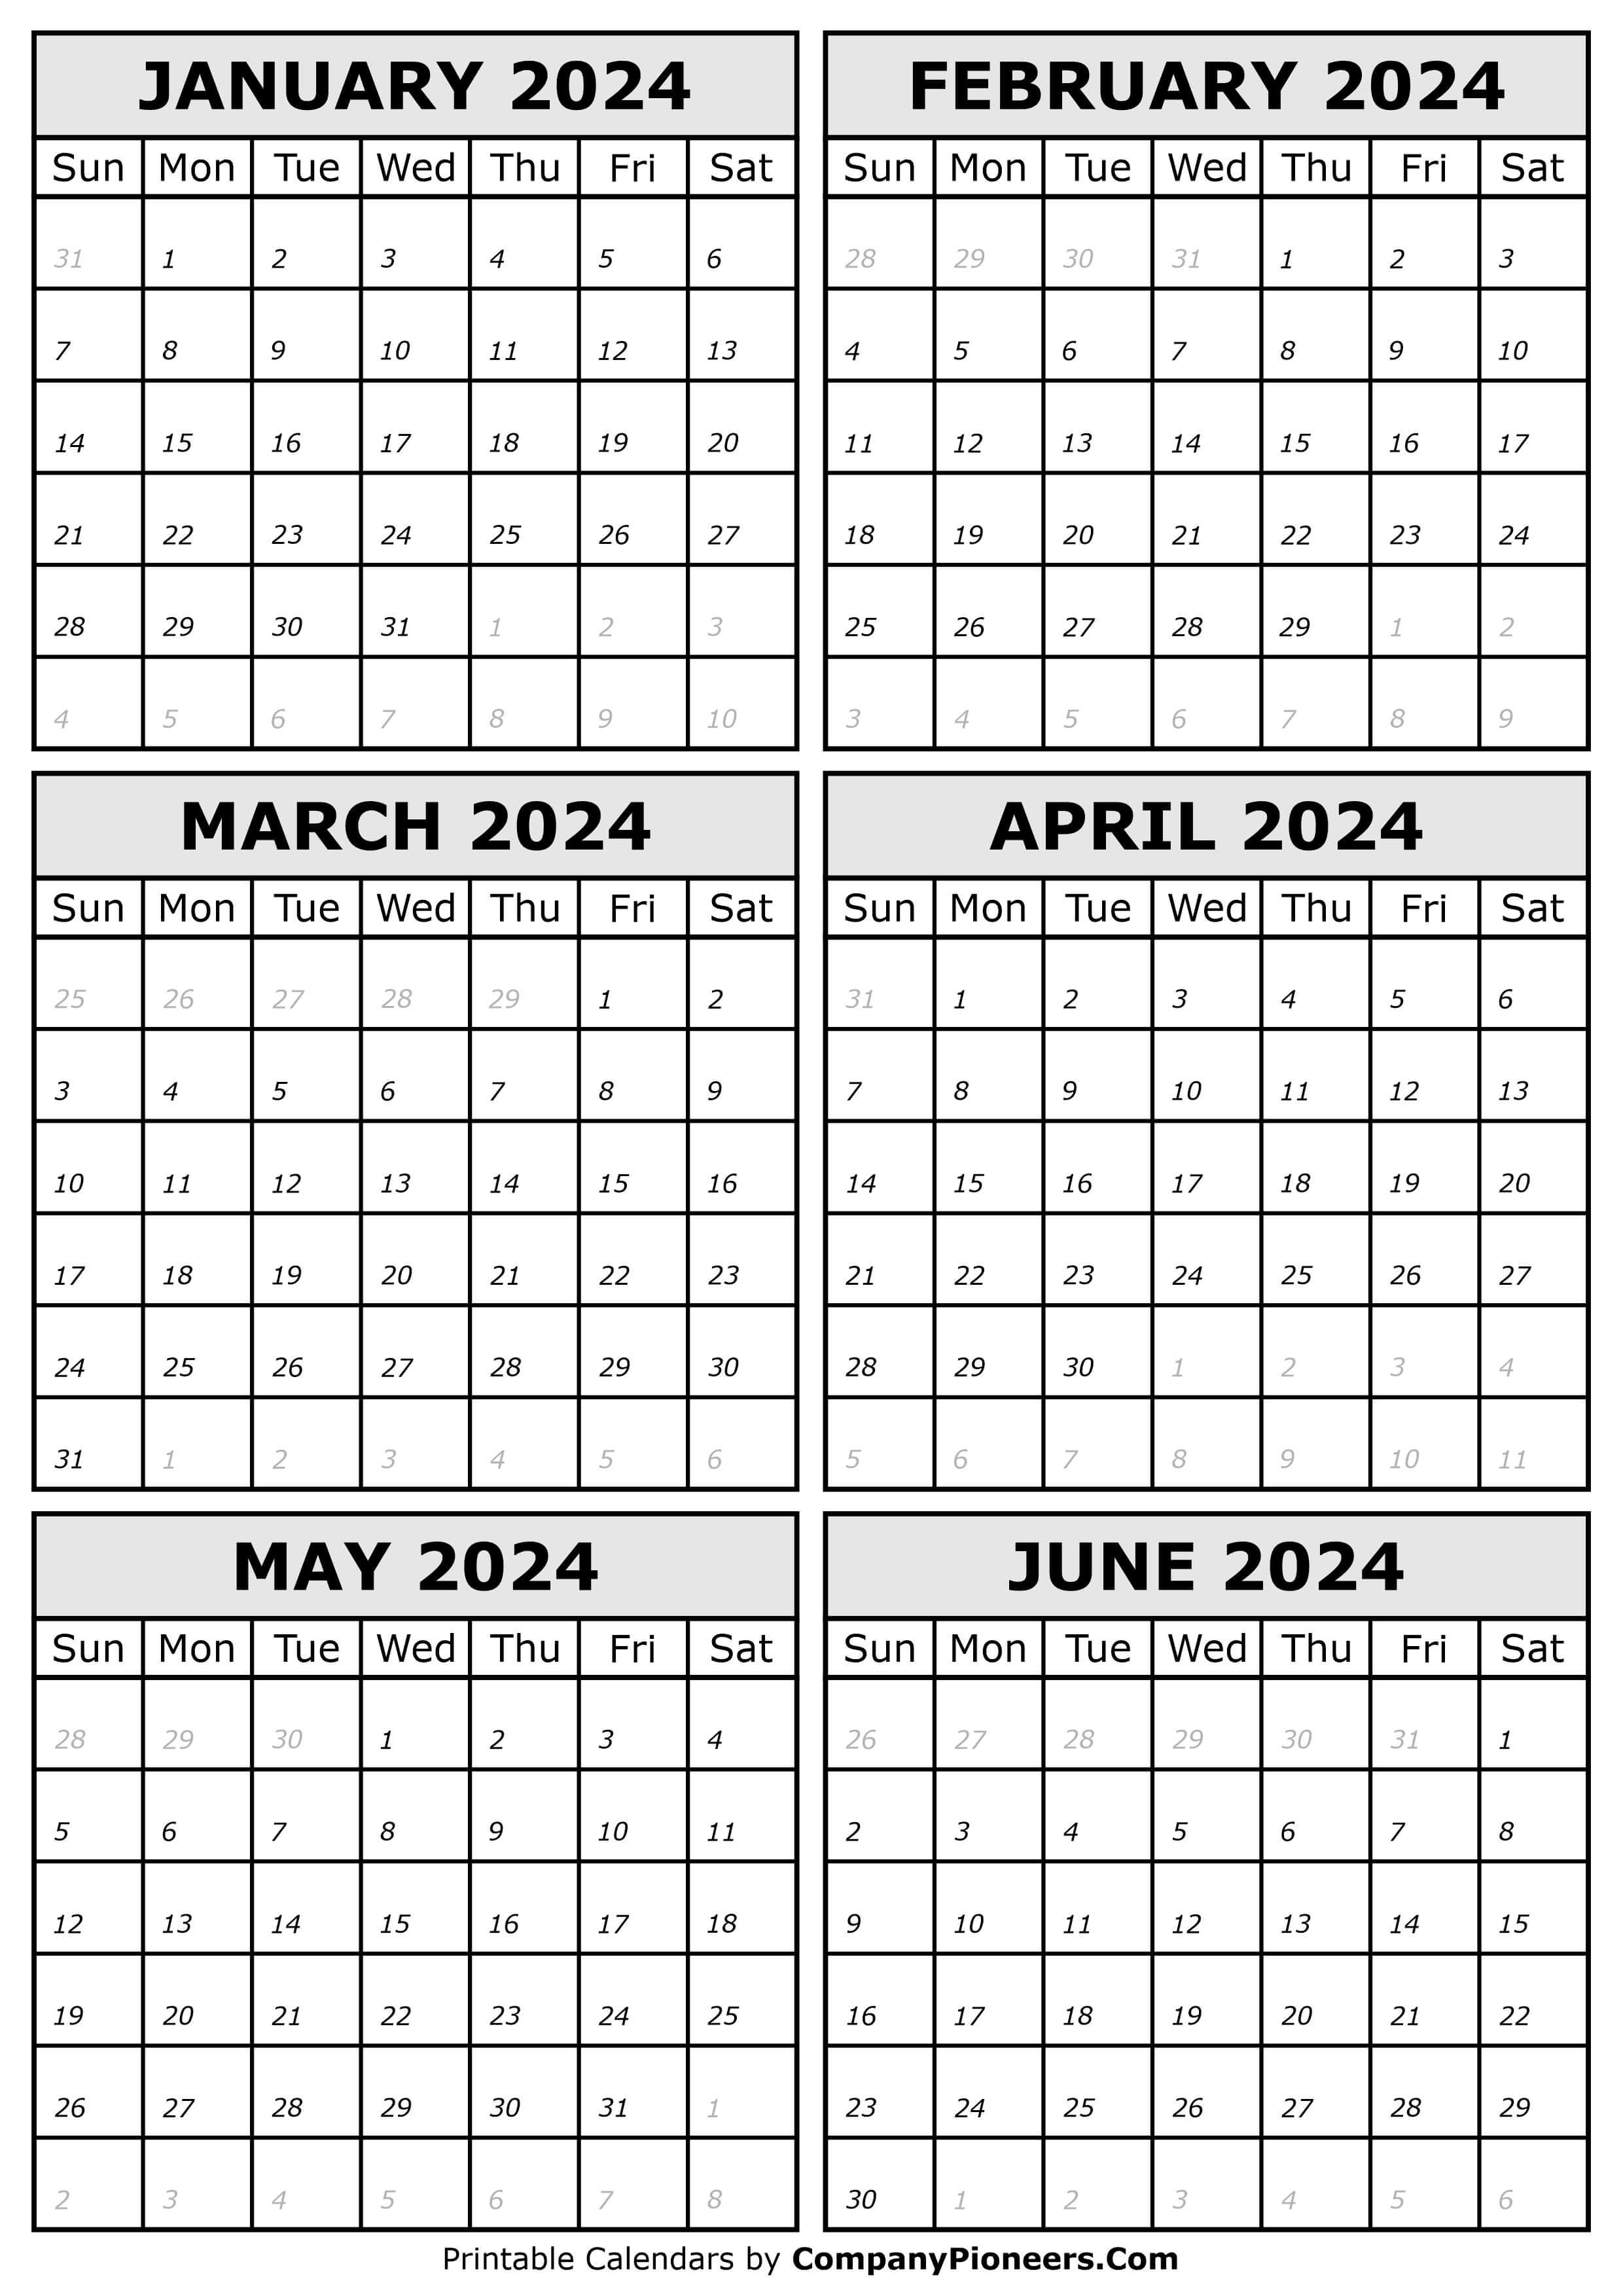 january-2024-to-june-2024-calendar-printable-template